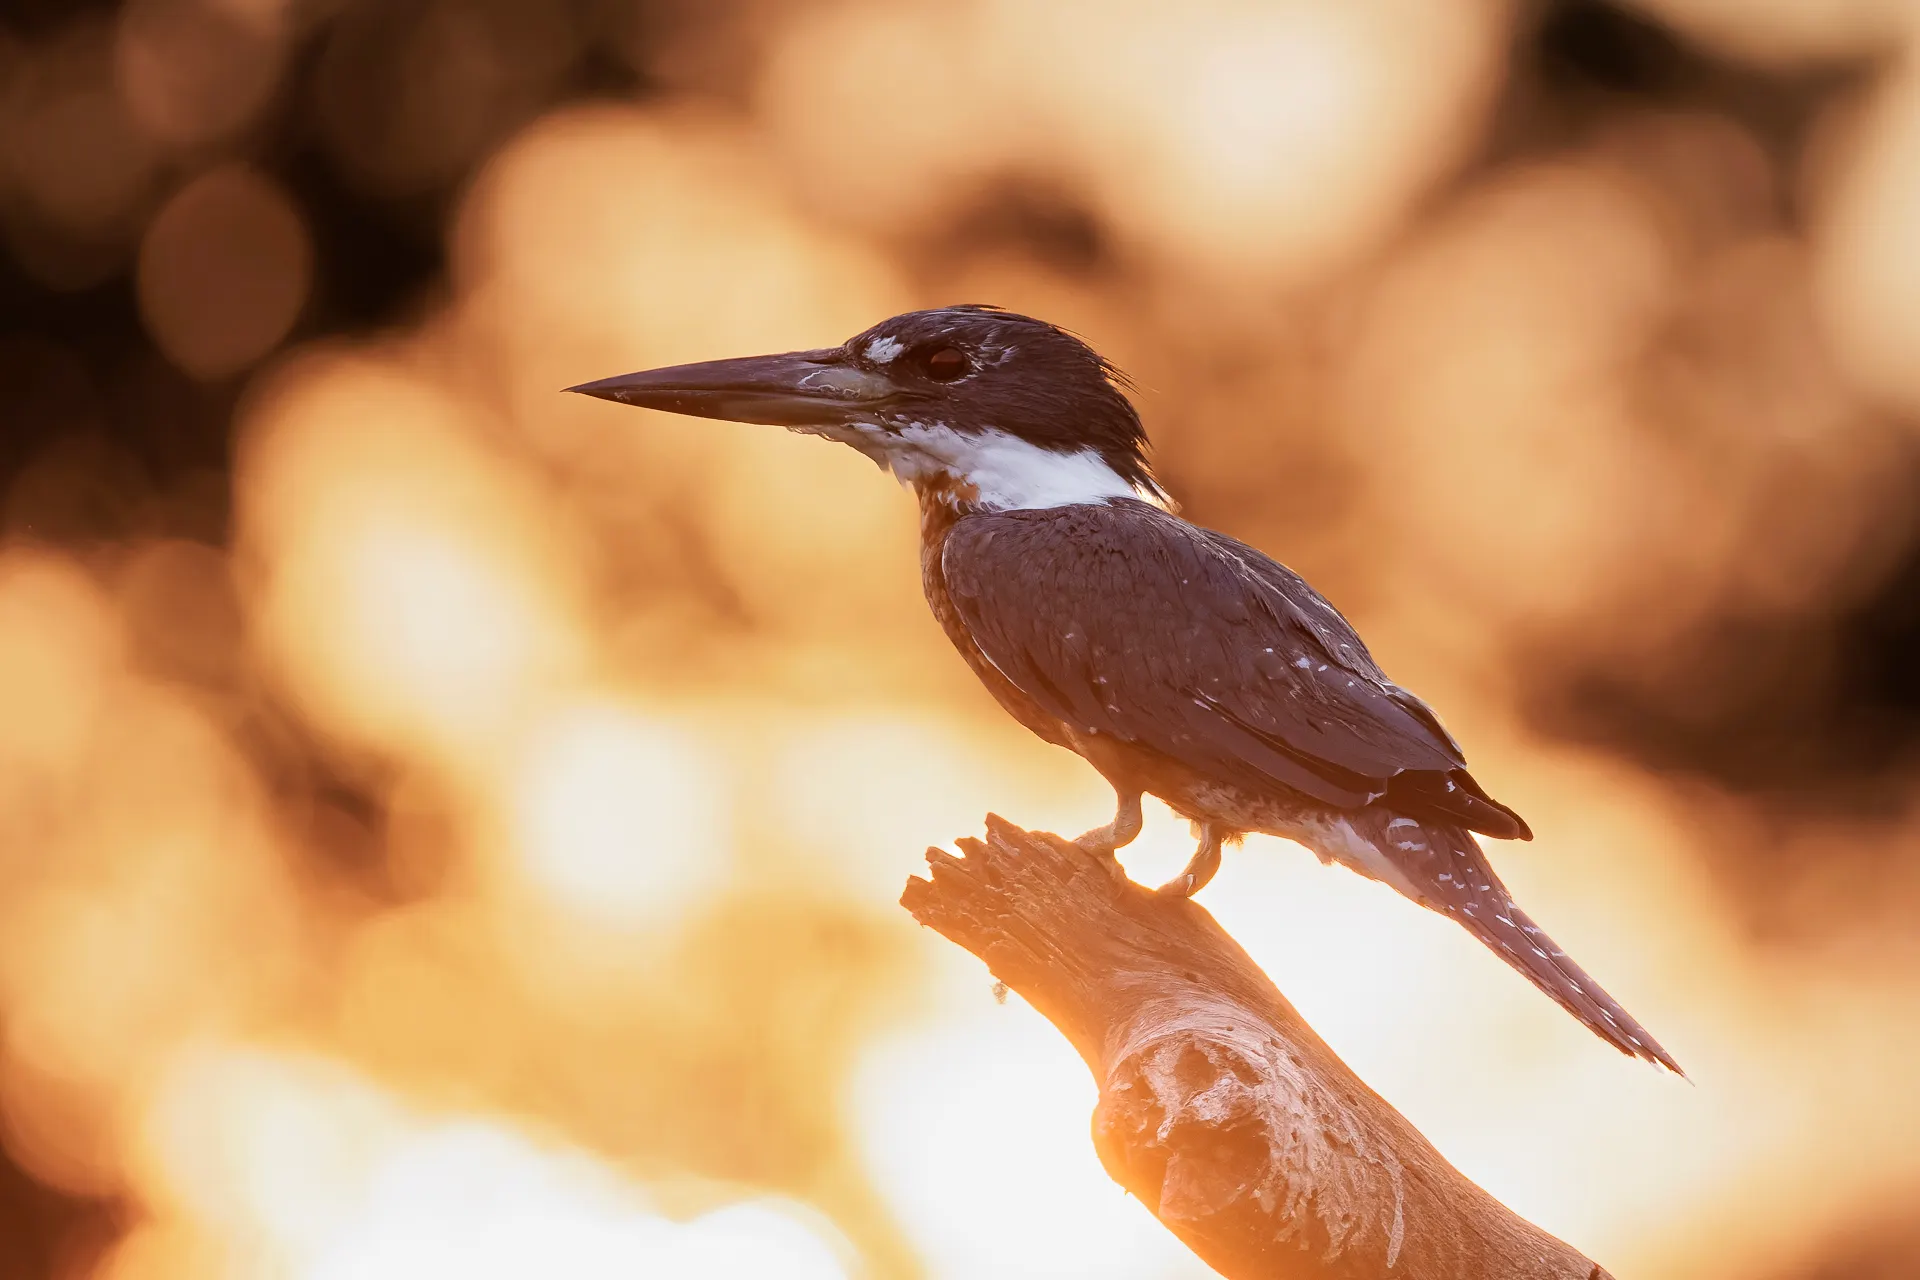 Ringed kingfisher (megaceryle torquata) | Pantanal | Brazil